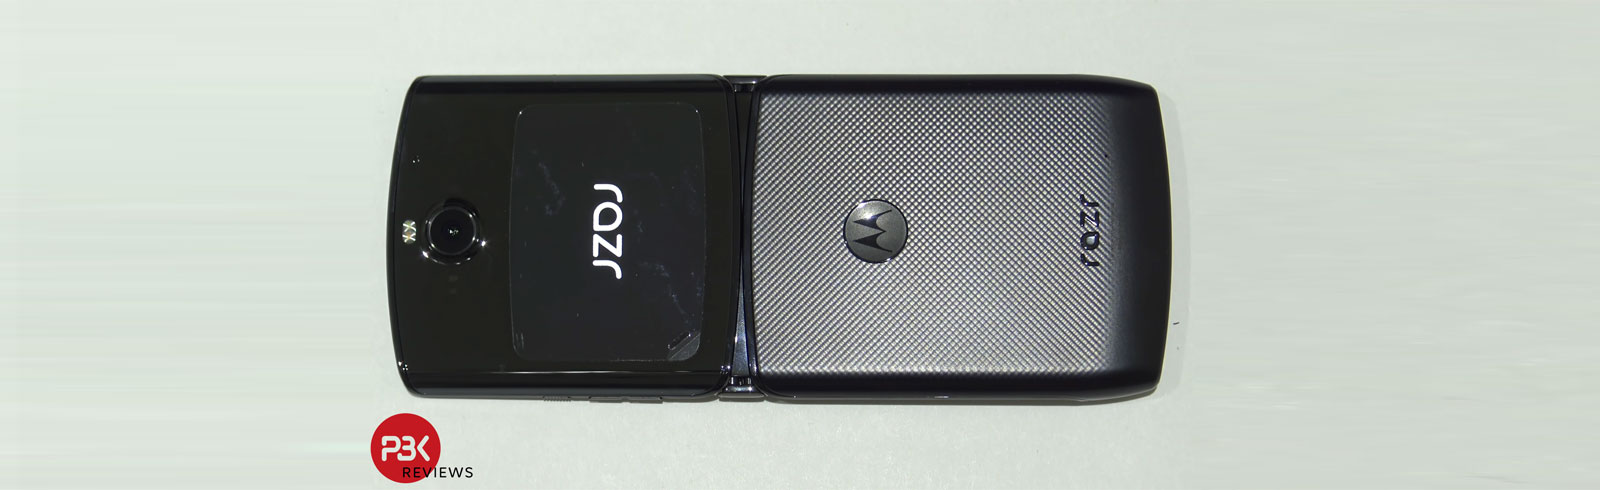 Video giới thiệu Motorola Razr năm 2020